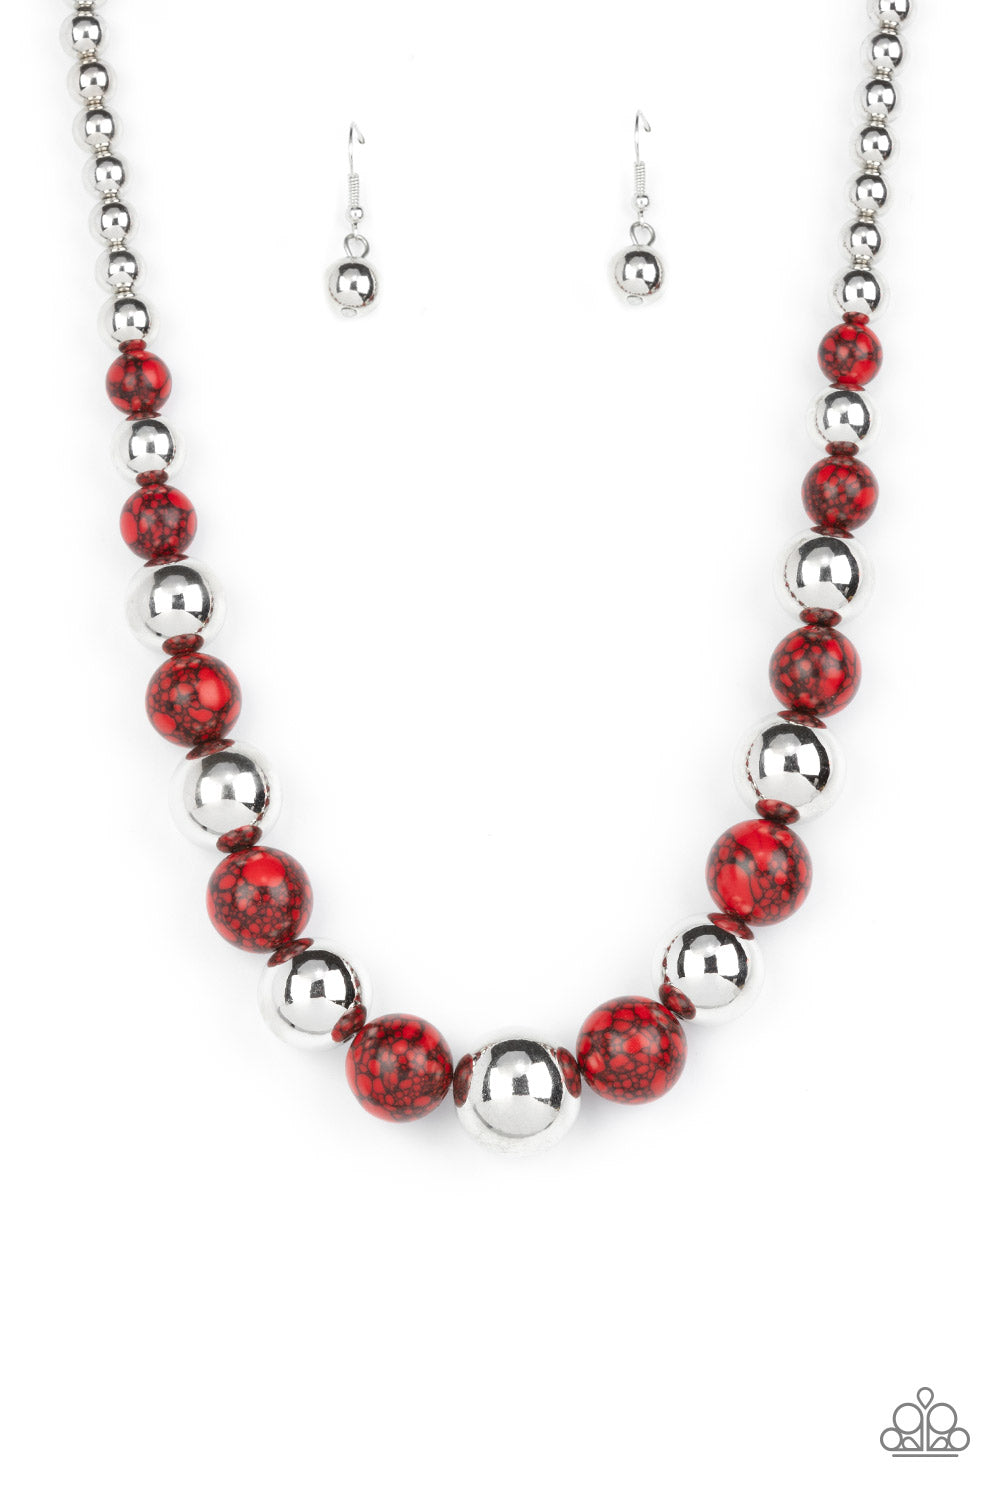 Stone Age Adventurer - Red Necklace - Paparazzi - Dare2bdazzlin N Jewelry